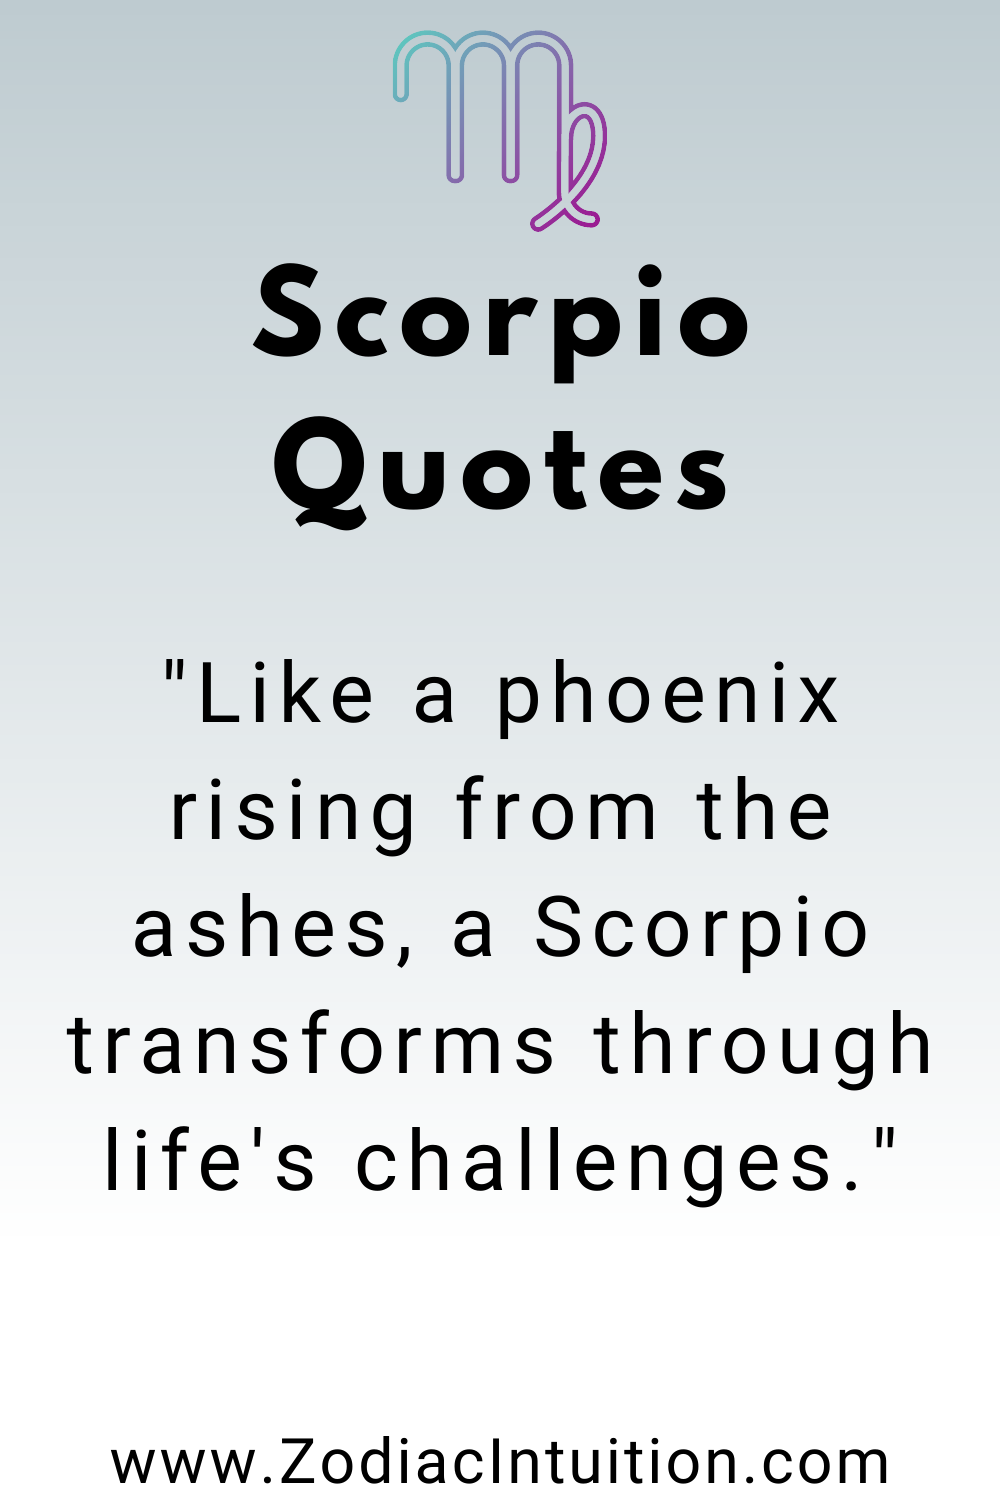 Top 5 Scorpio Quotes And Inspiration